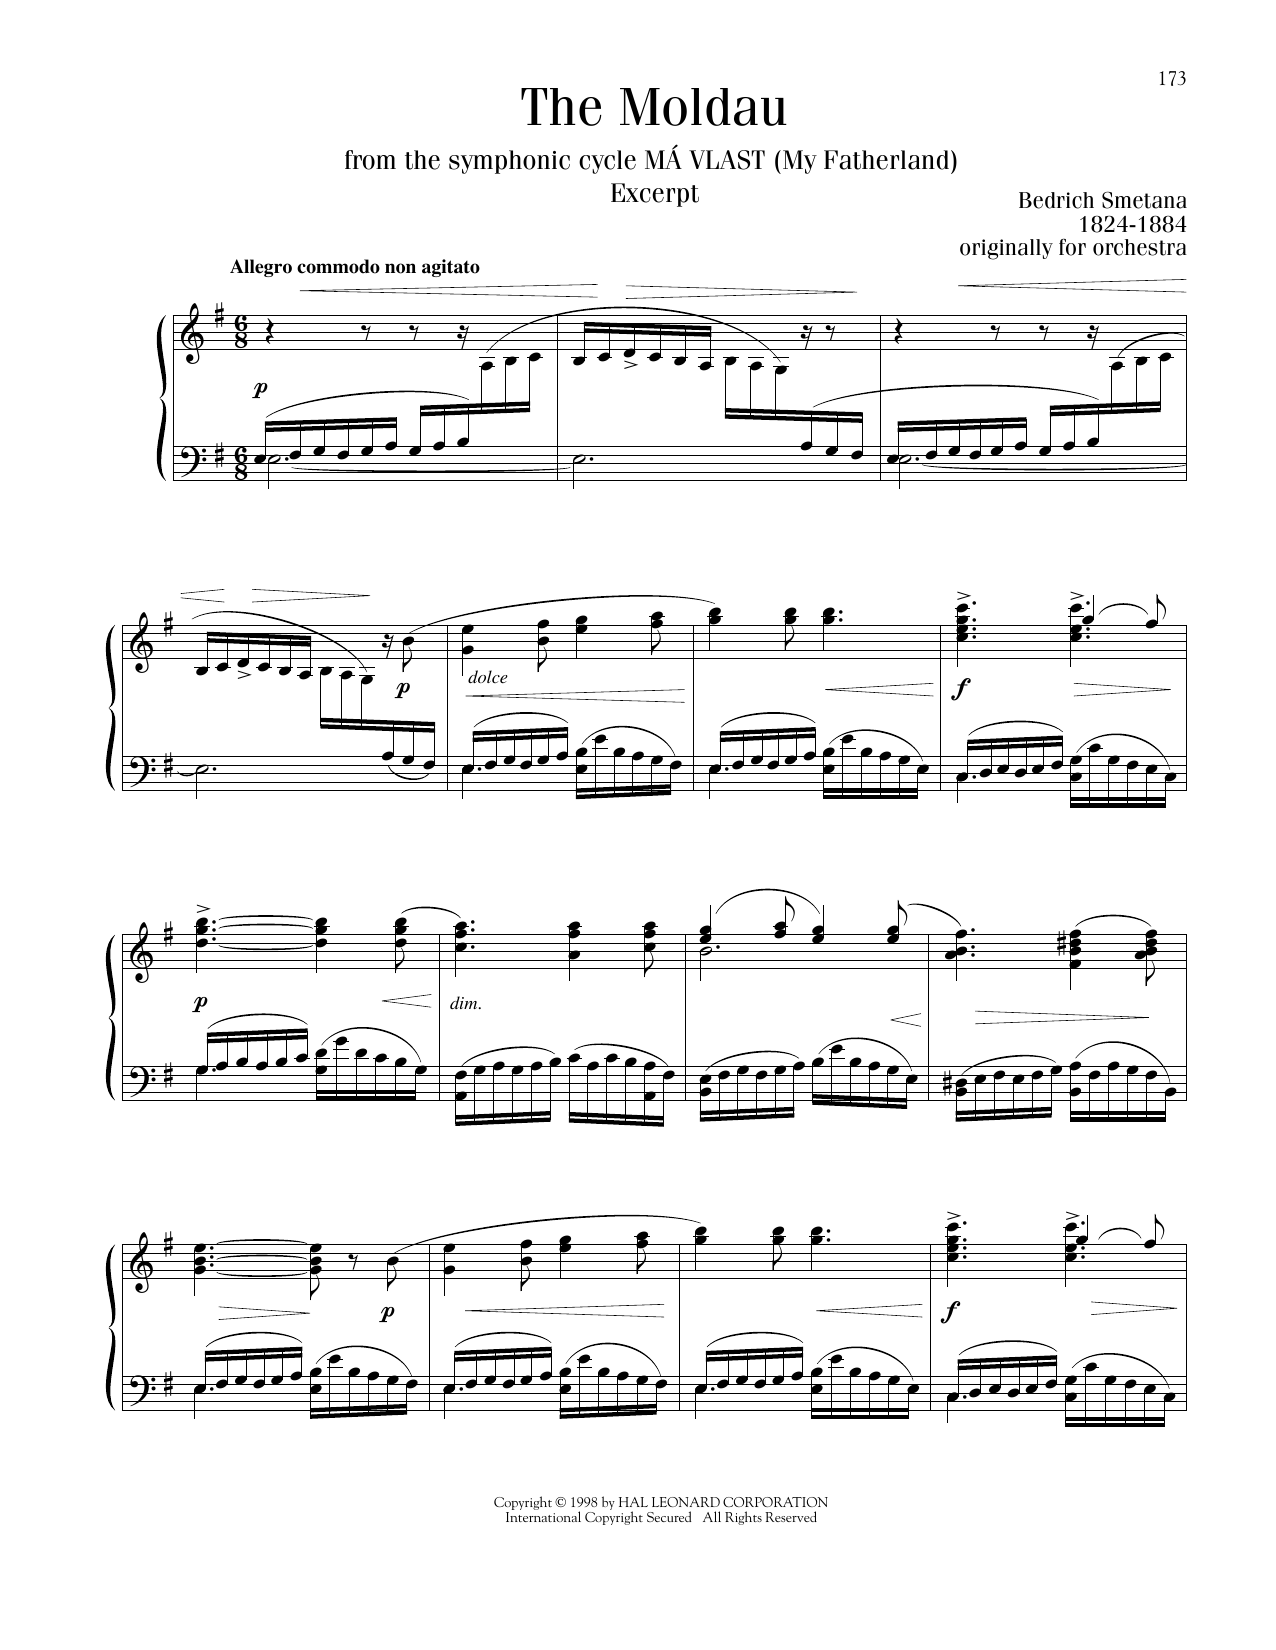 Bedrich Smetana The Moldau sheet music notes printable PDF score